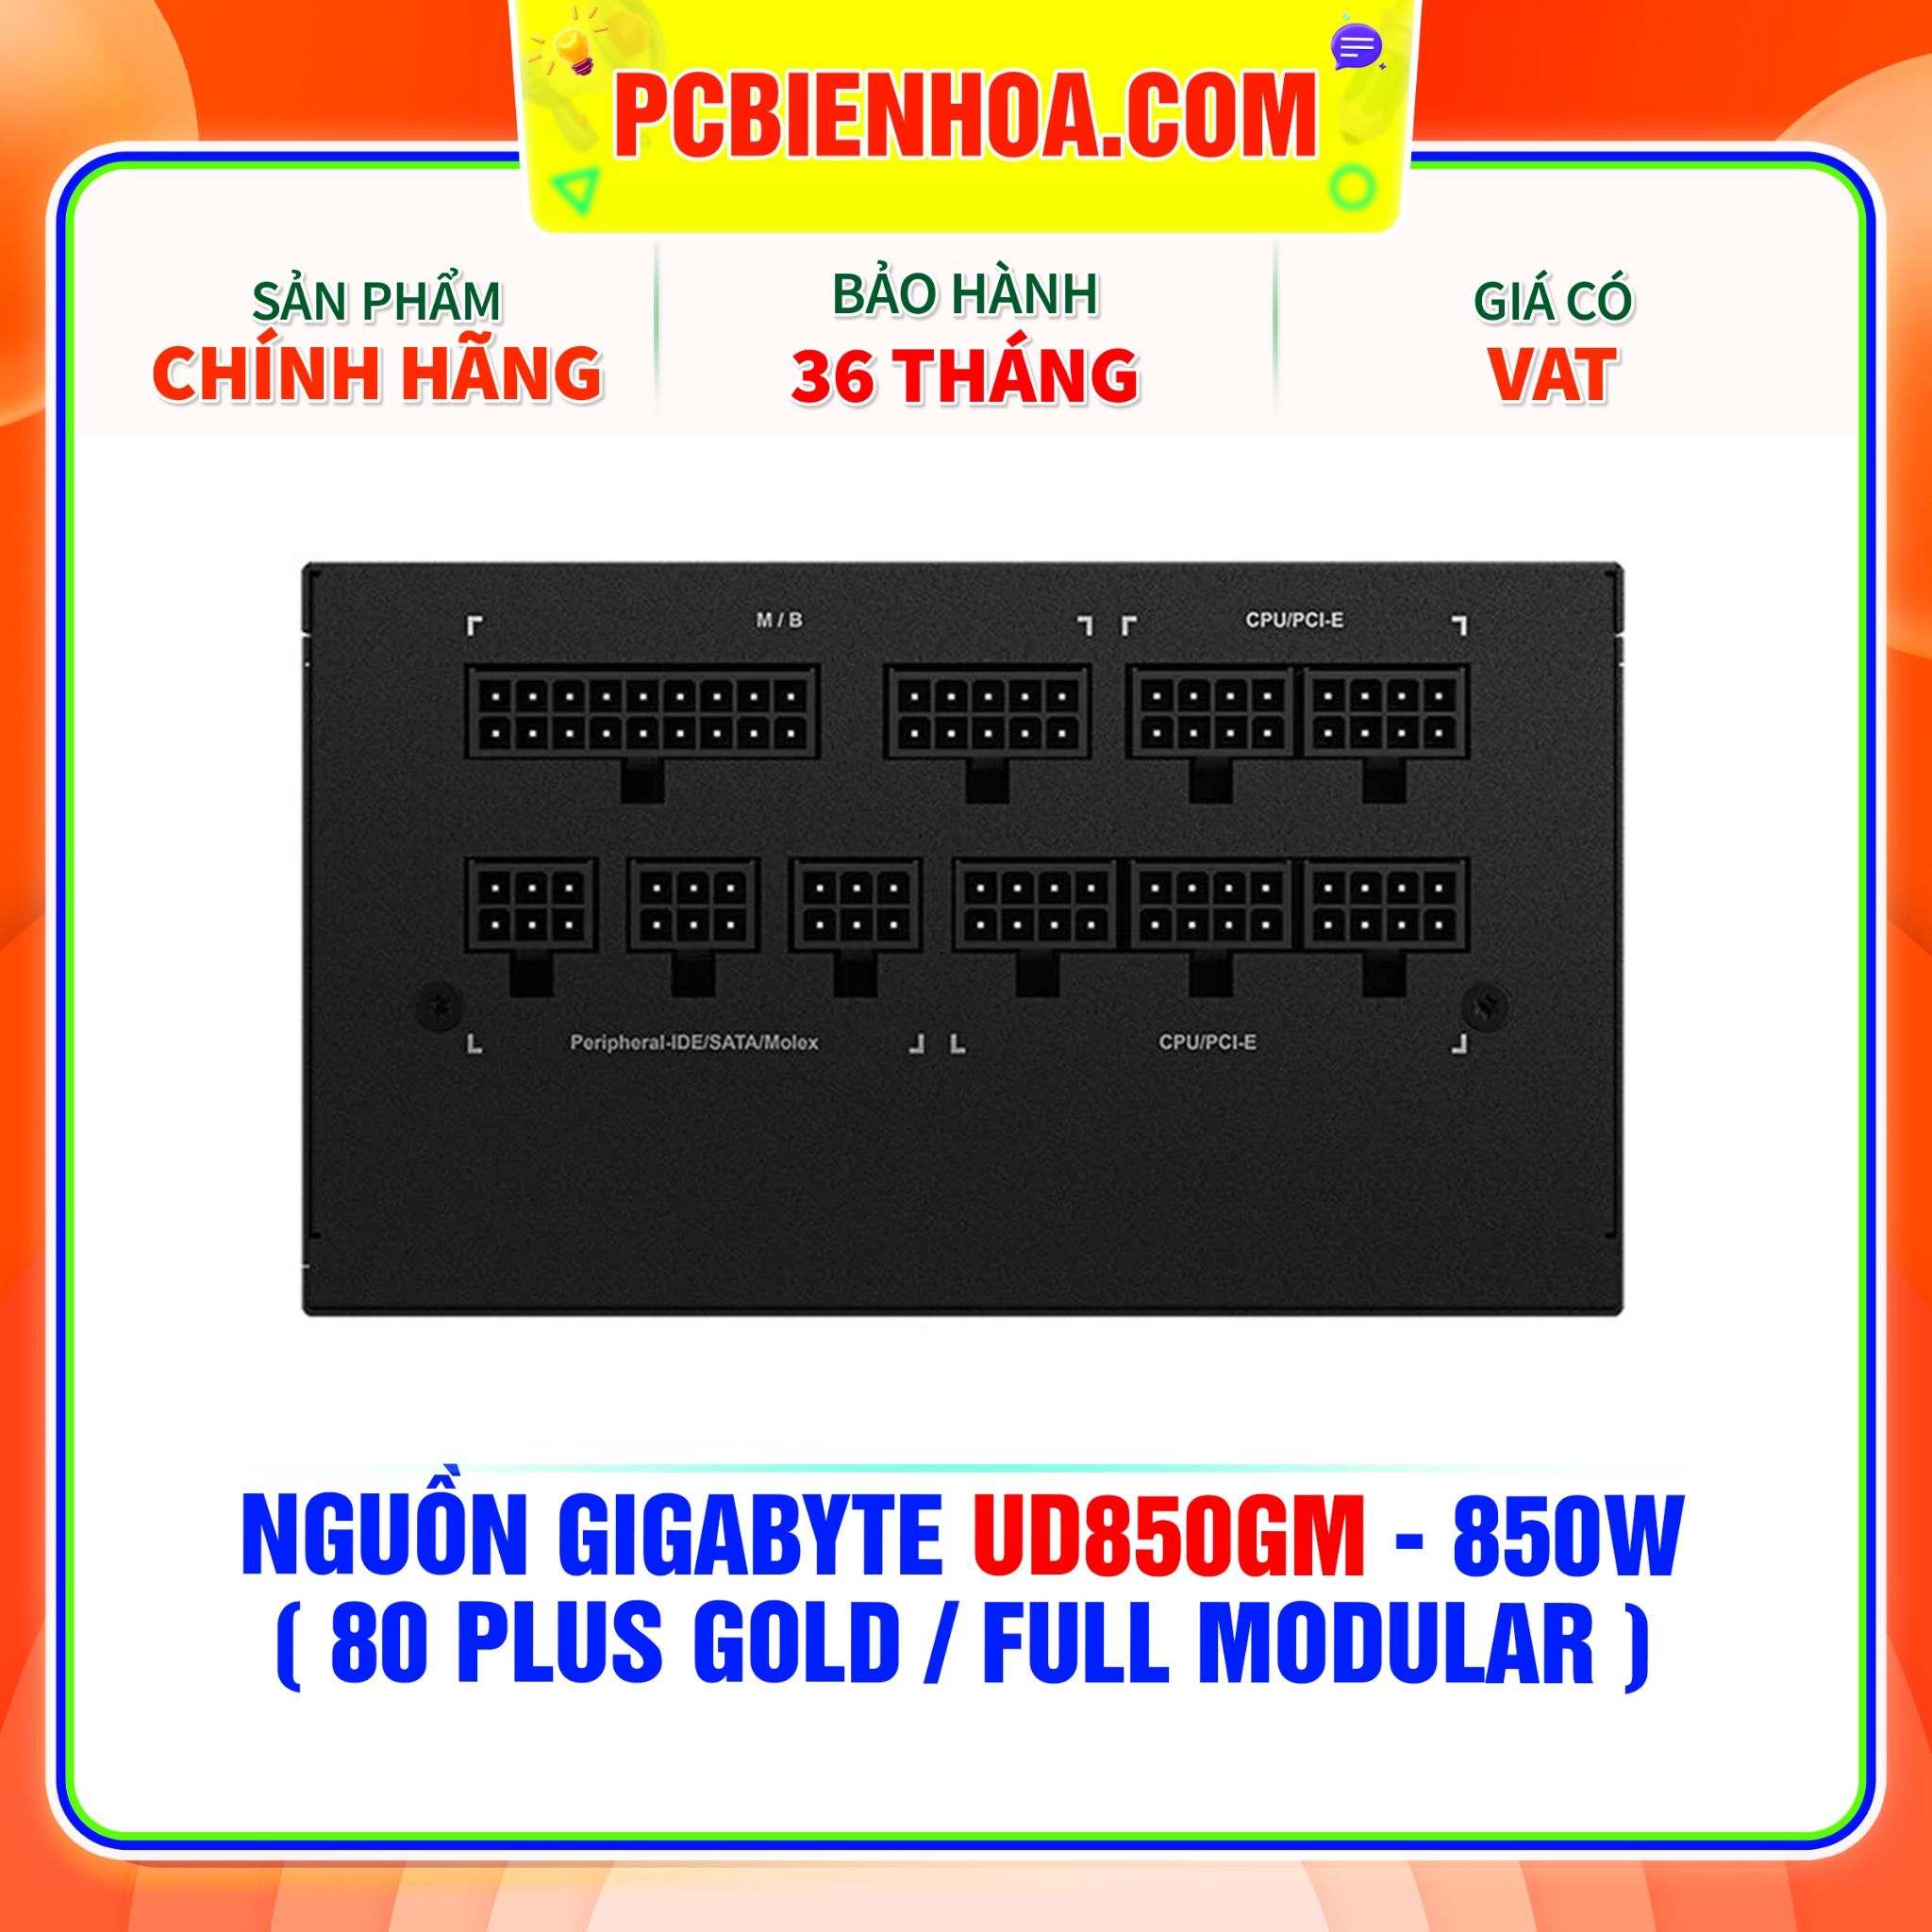  NGUỒN GIGABYTE UD850GM - 850W ( 80PLUS GOLD / FULL MODULAR ) 